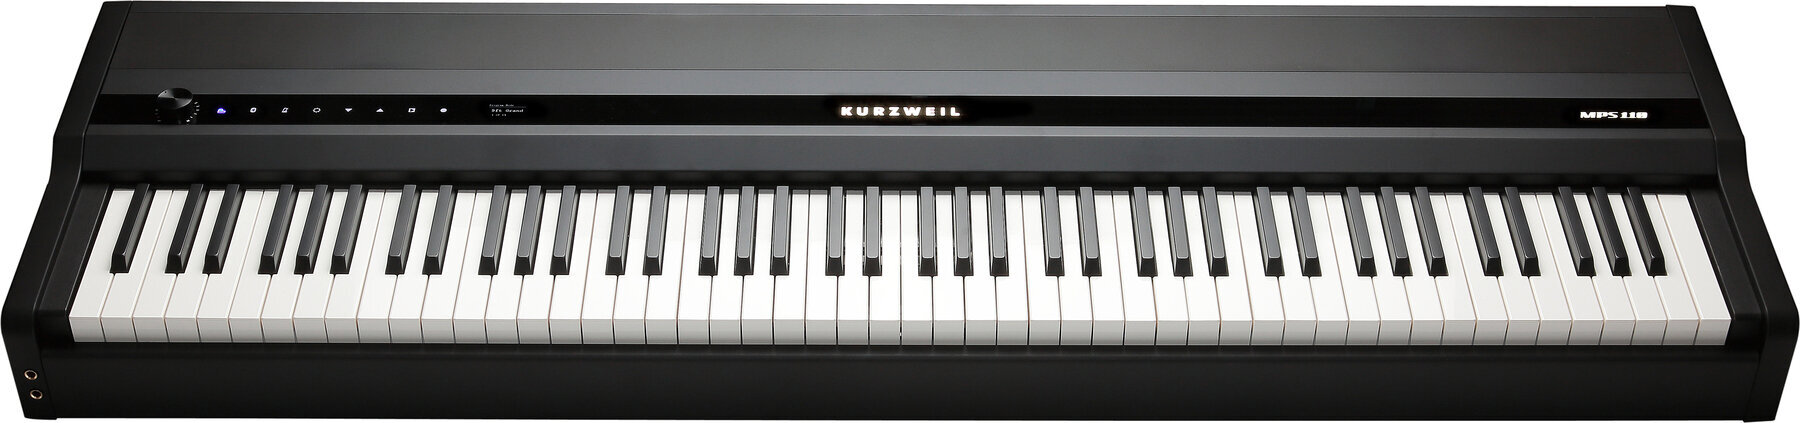 Digitalt scen piano Kurzweil MPS110 Digitalt scen piano